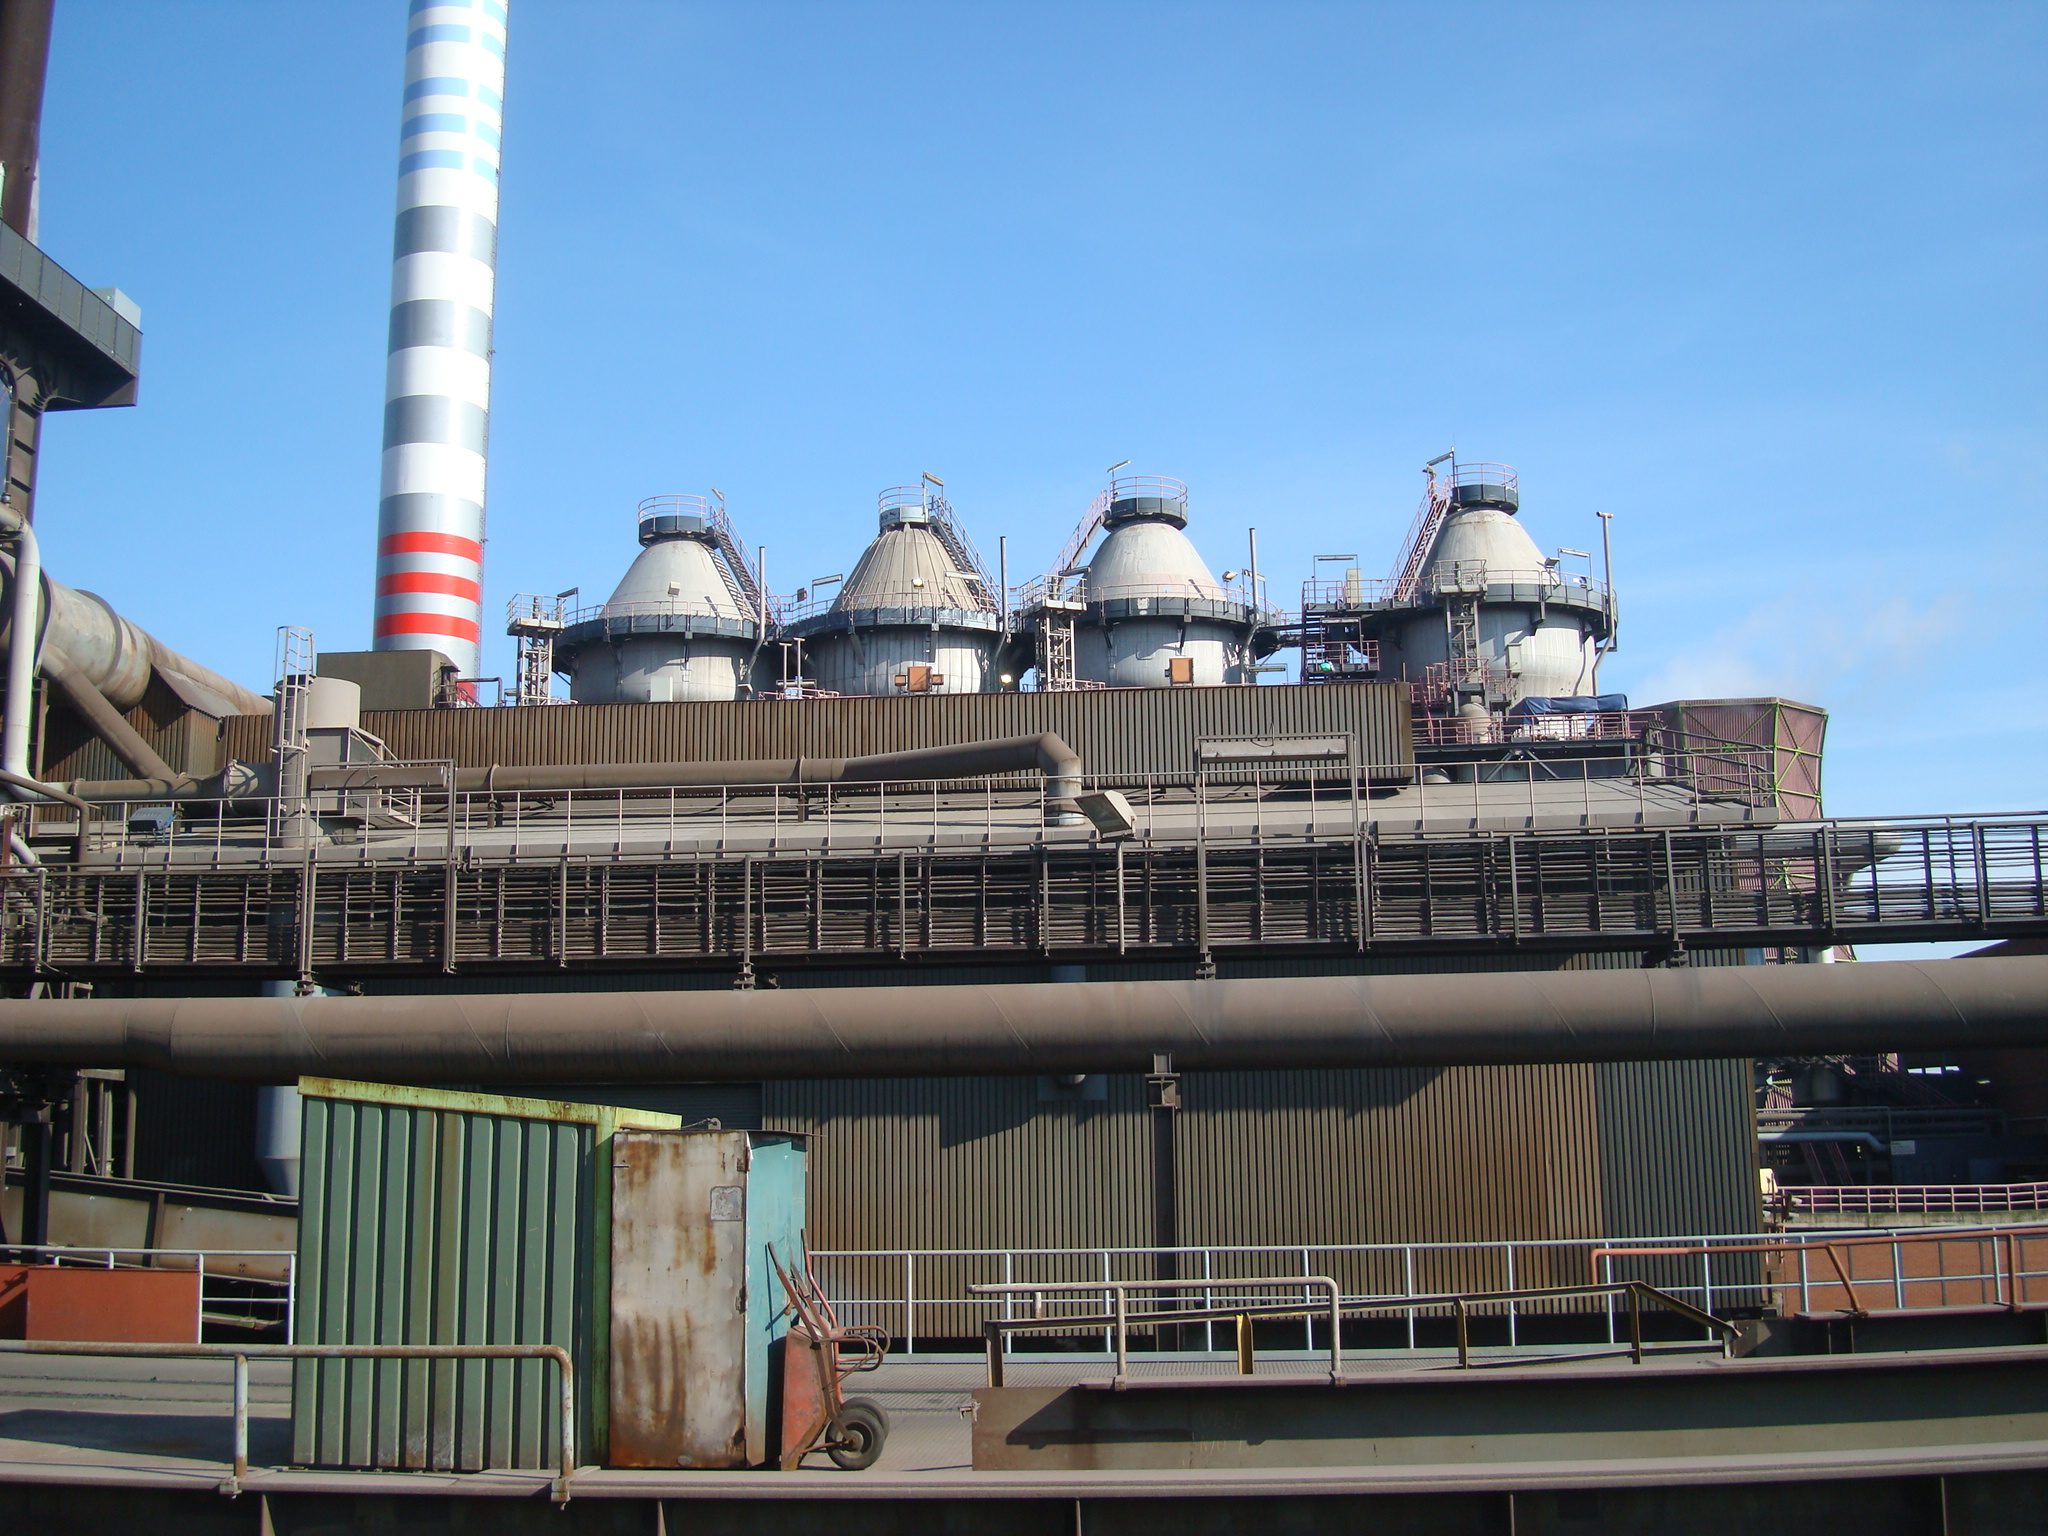 Steel Works Duisburg (Thyssen Krupp)